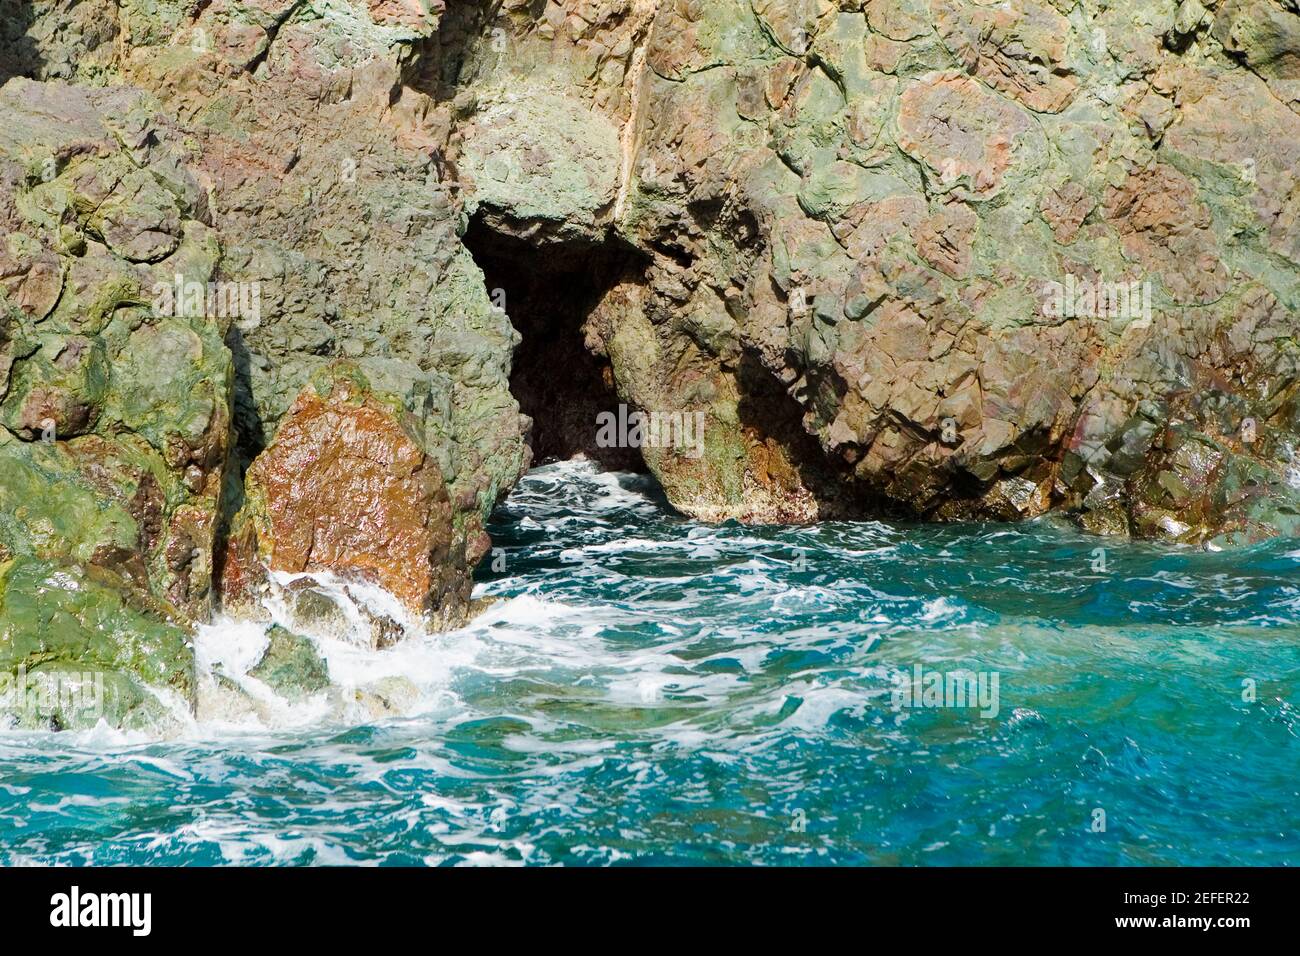 Rock formations in the sea, Italian Riviera, Mar Ligure, Genoa, Liguria, Italy Stock Photo